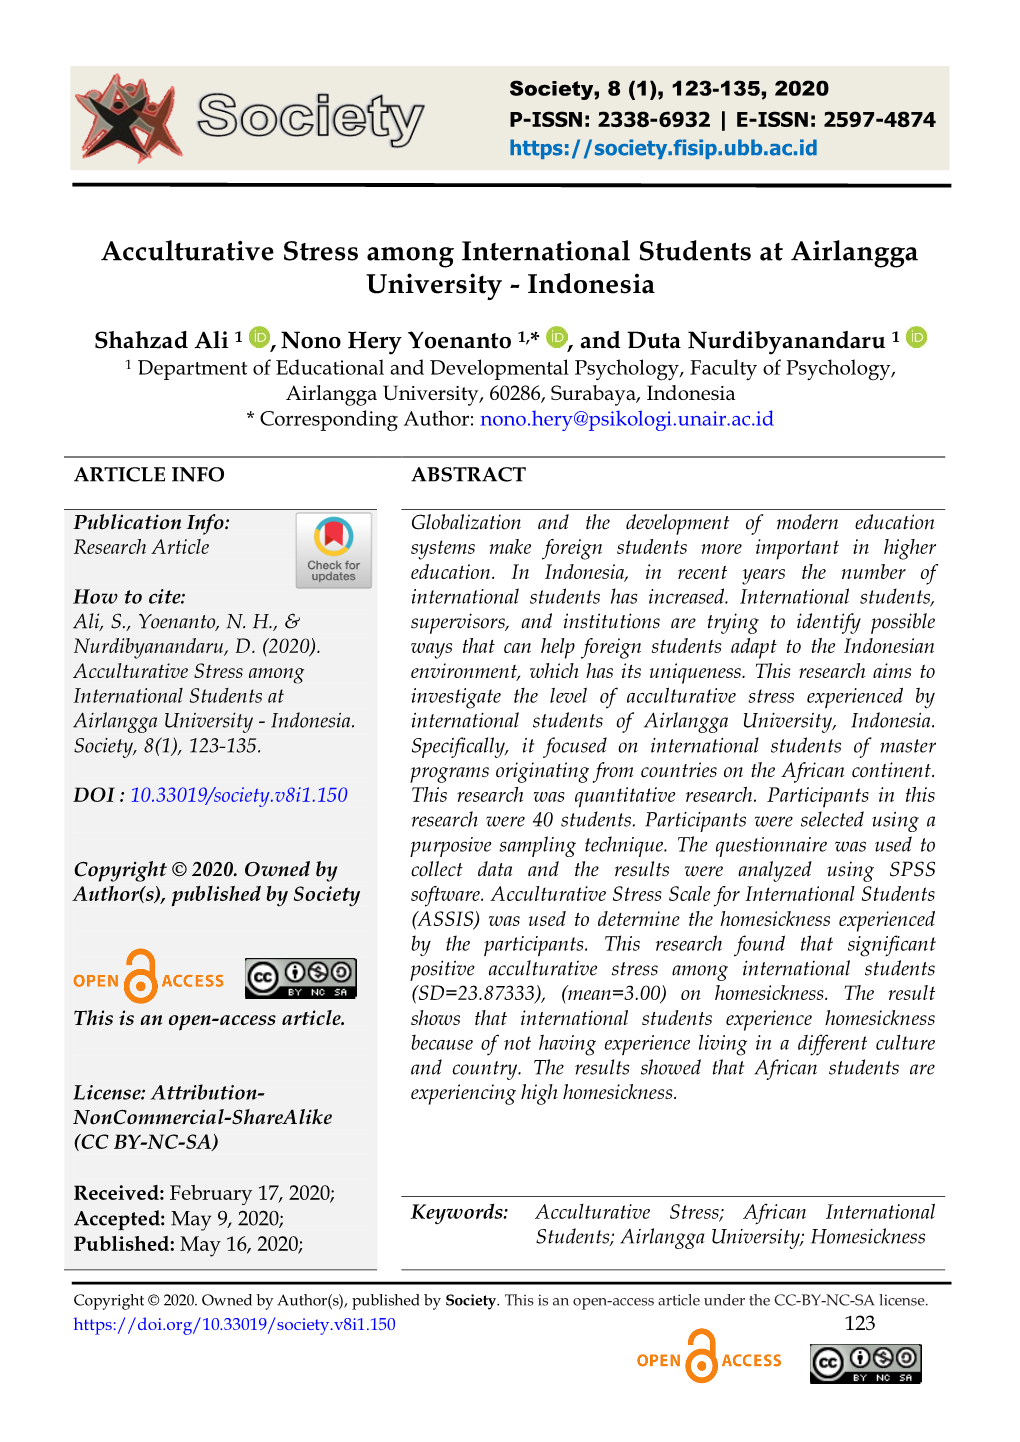 Acculturative Stress Among International Students at Airlangga University - Indonesia